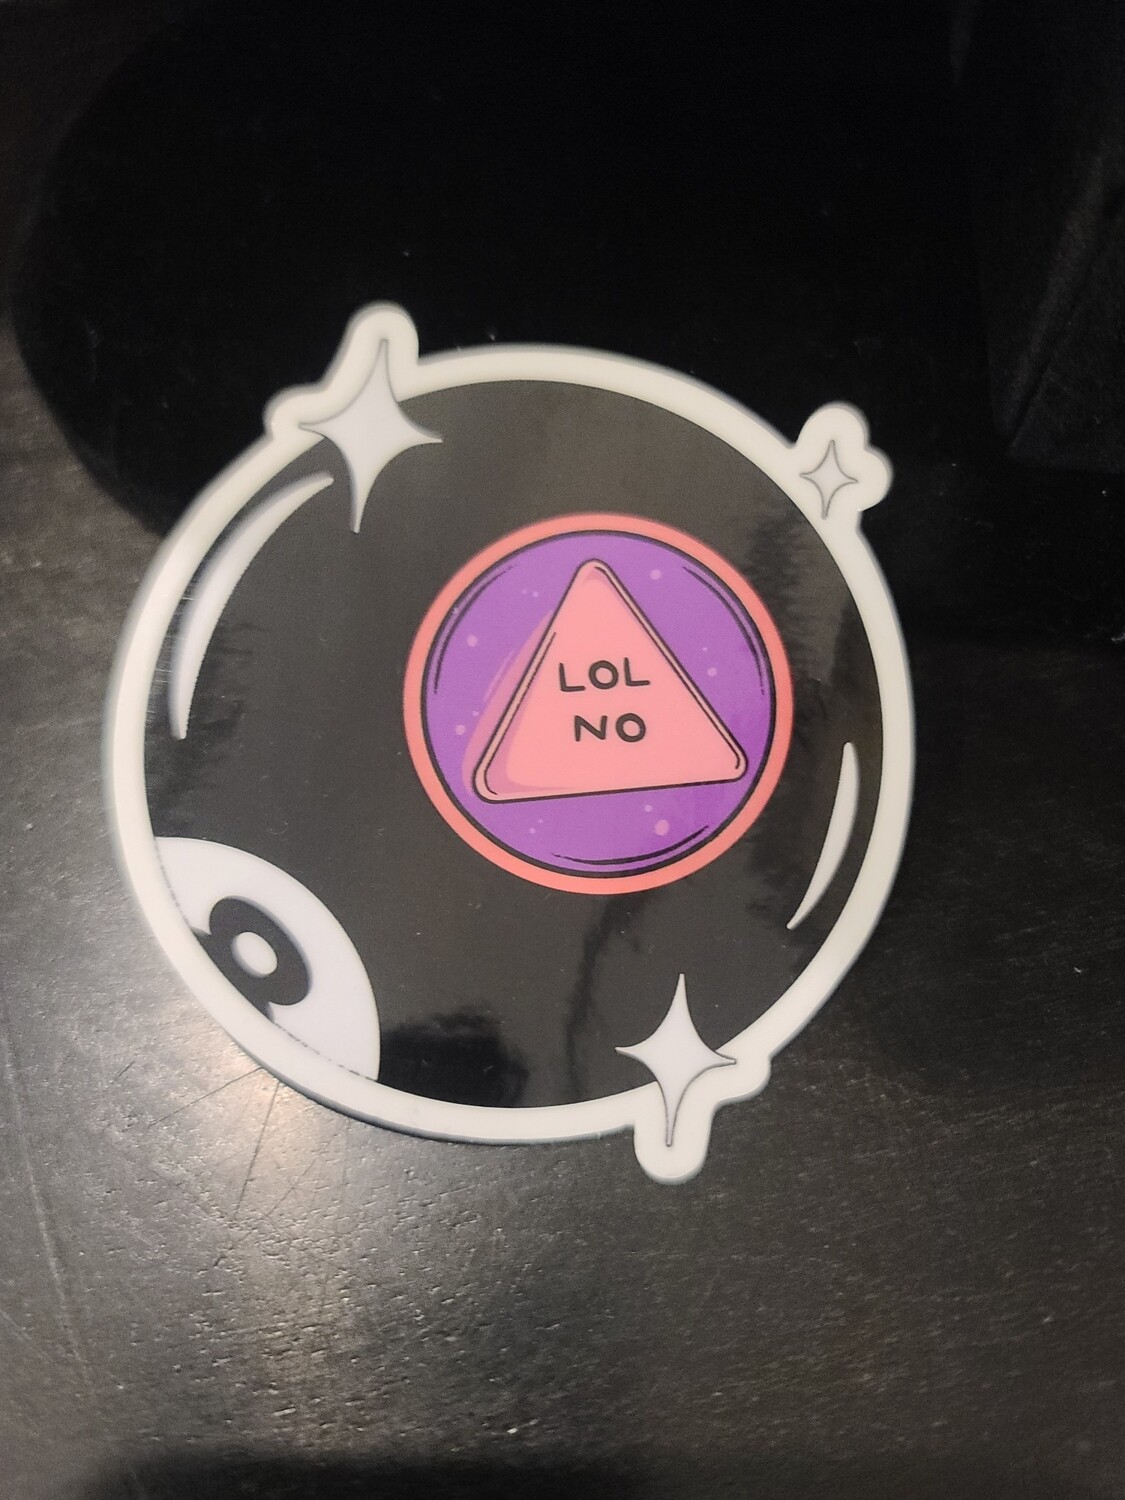 8 Ball Of Misfortune- Lol, No Sticker